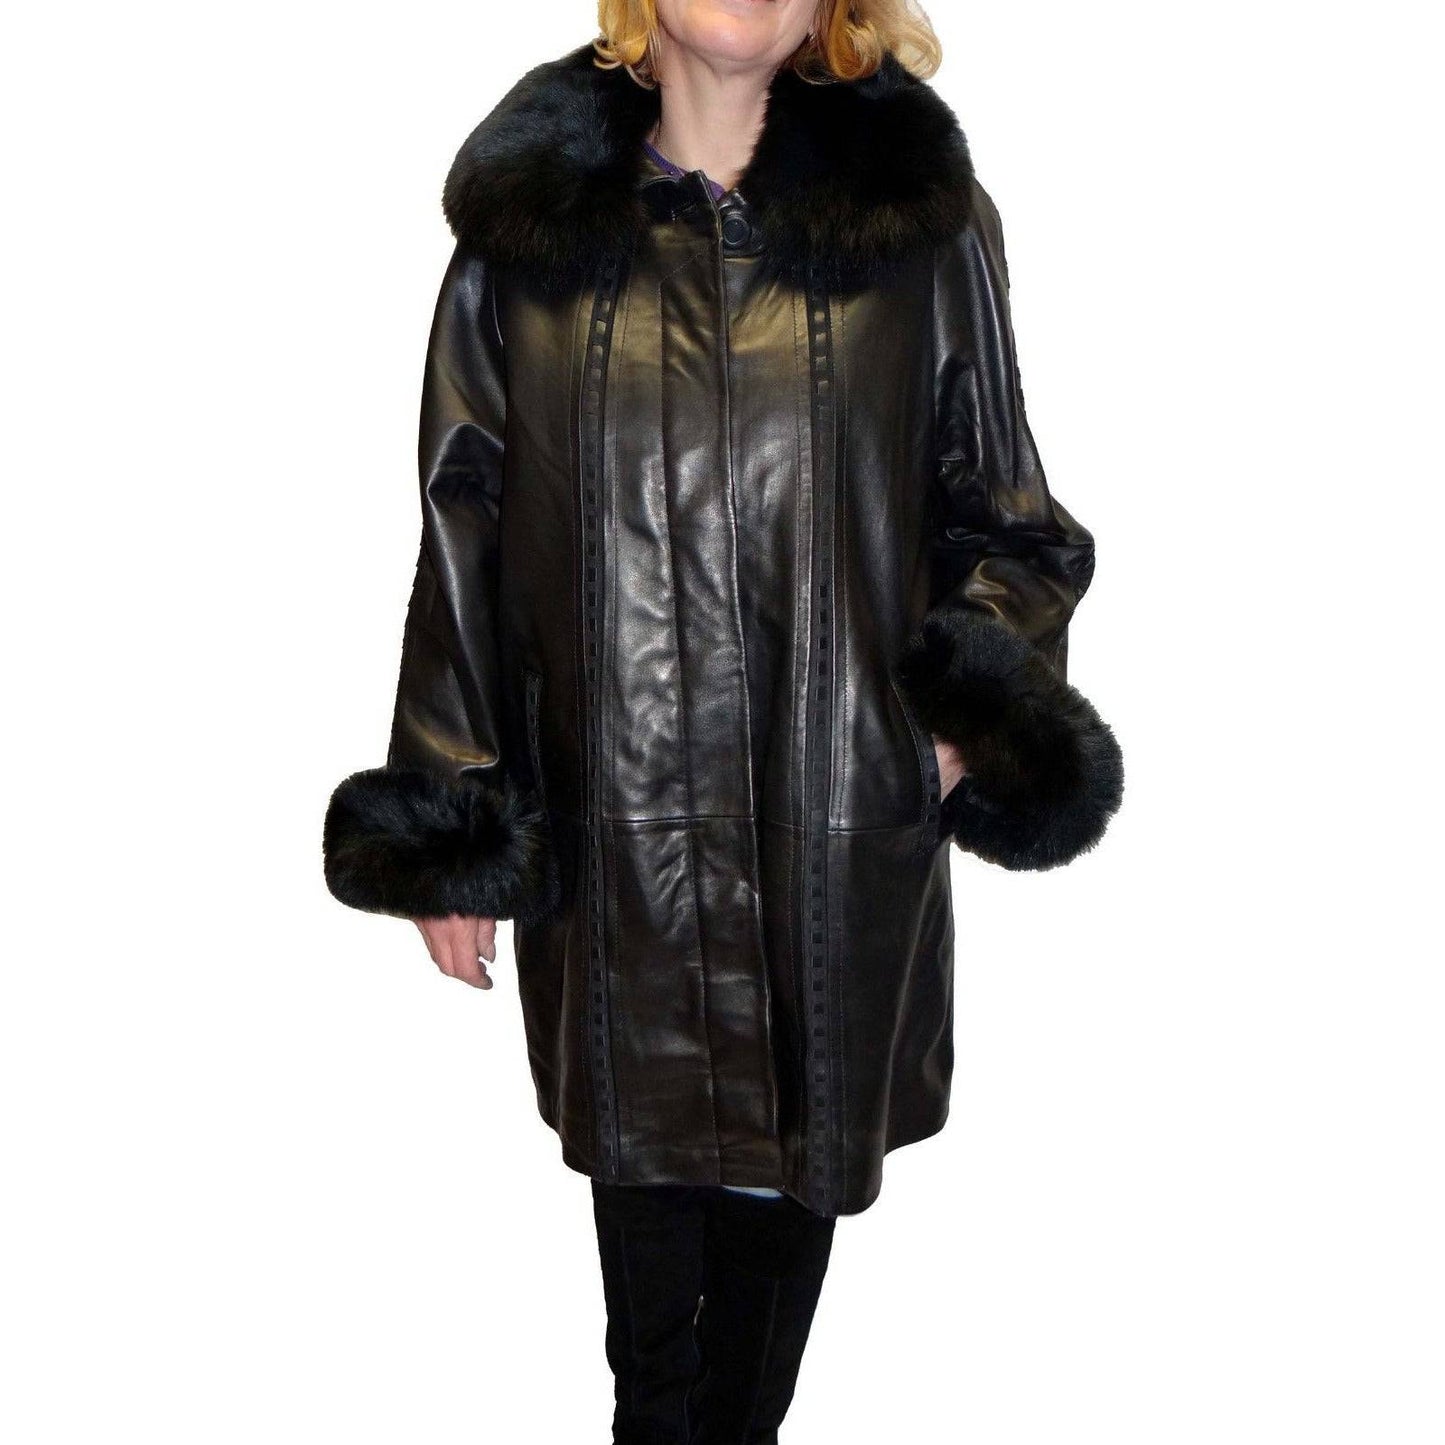 Knoles & Carter Women's Plus Size Leather Coat with Fox Fur Collar